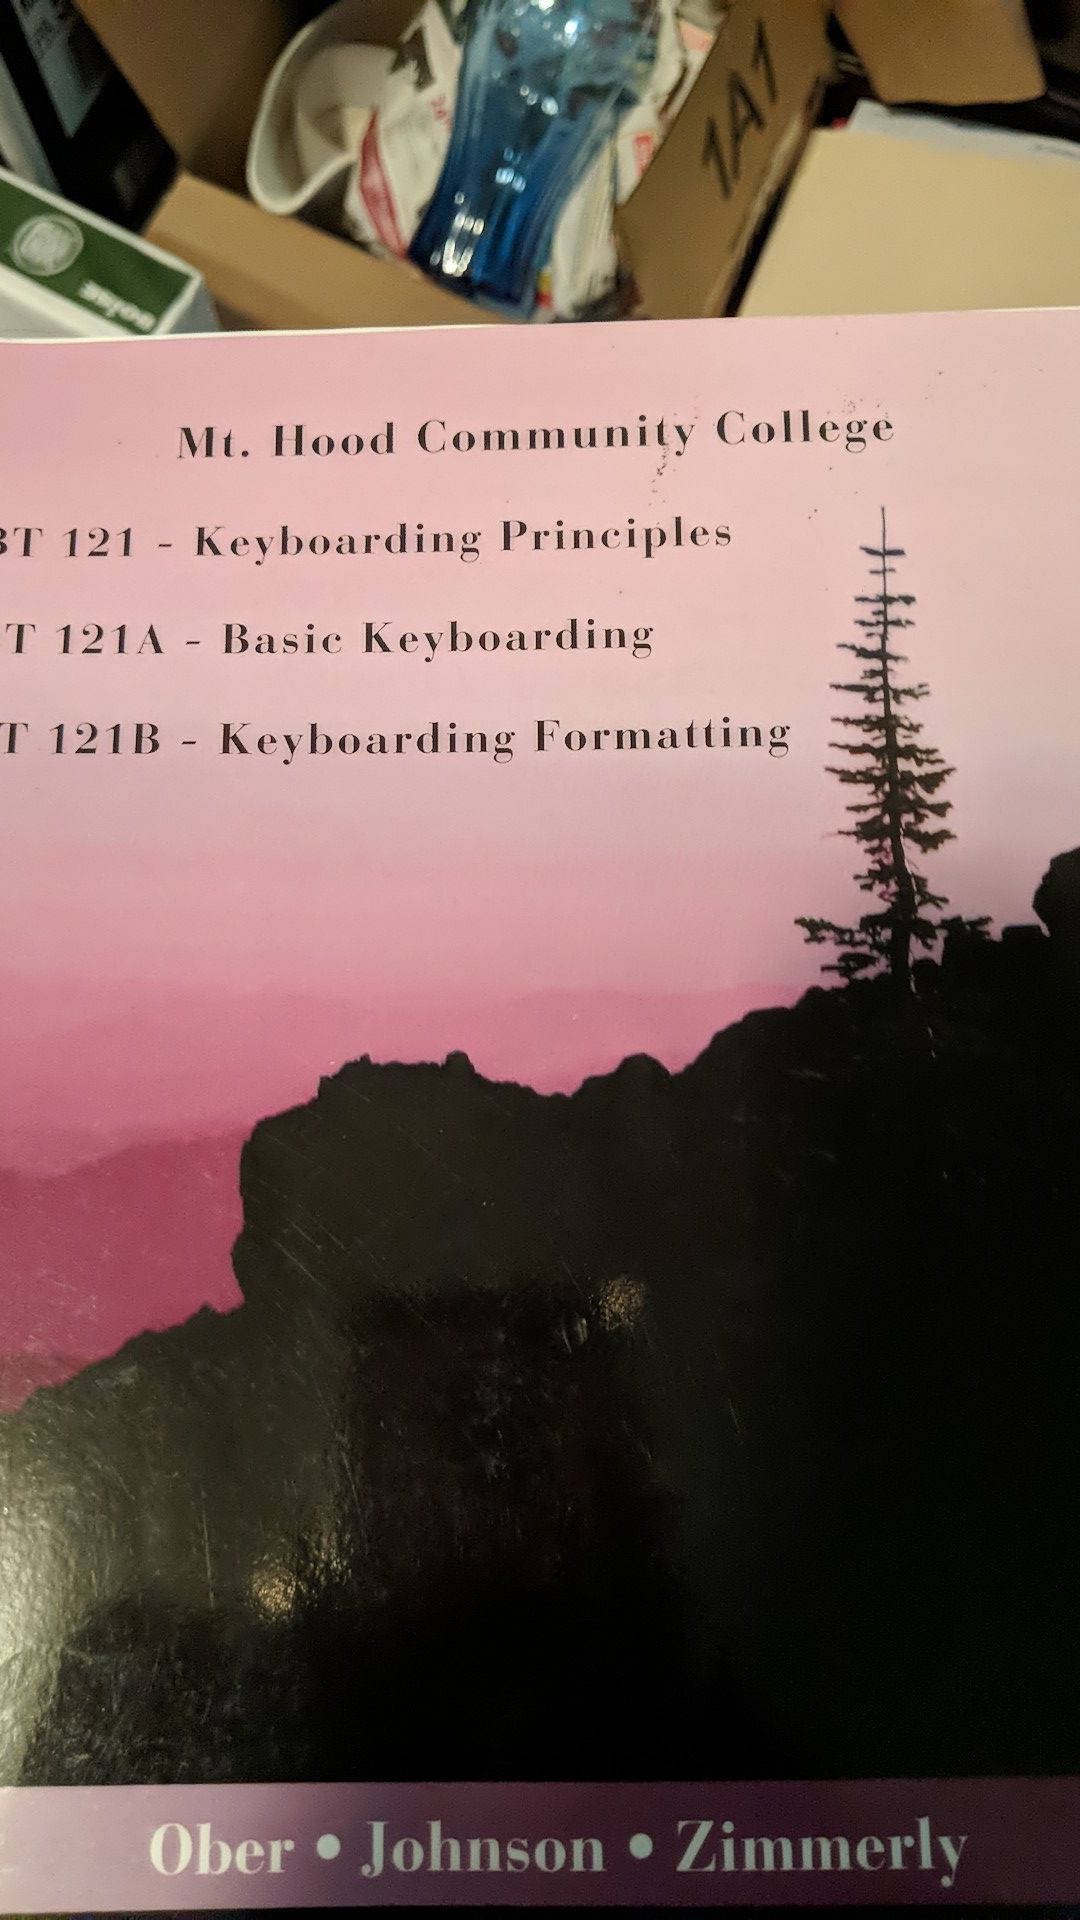 Mt. Hood Community College Keyboarding Book